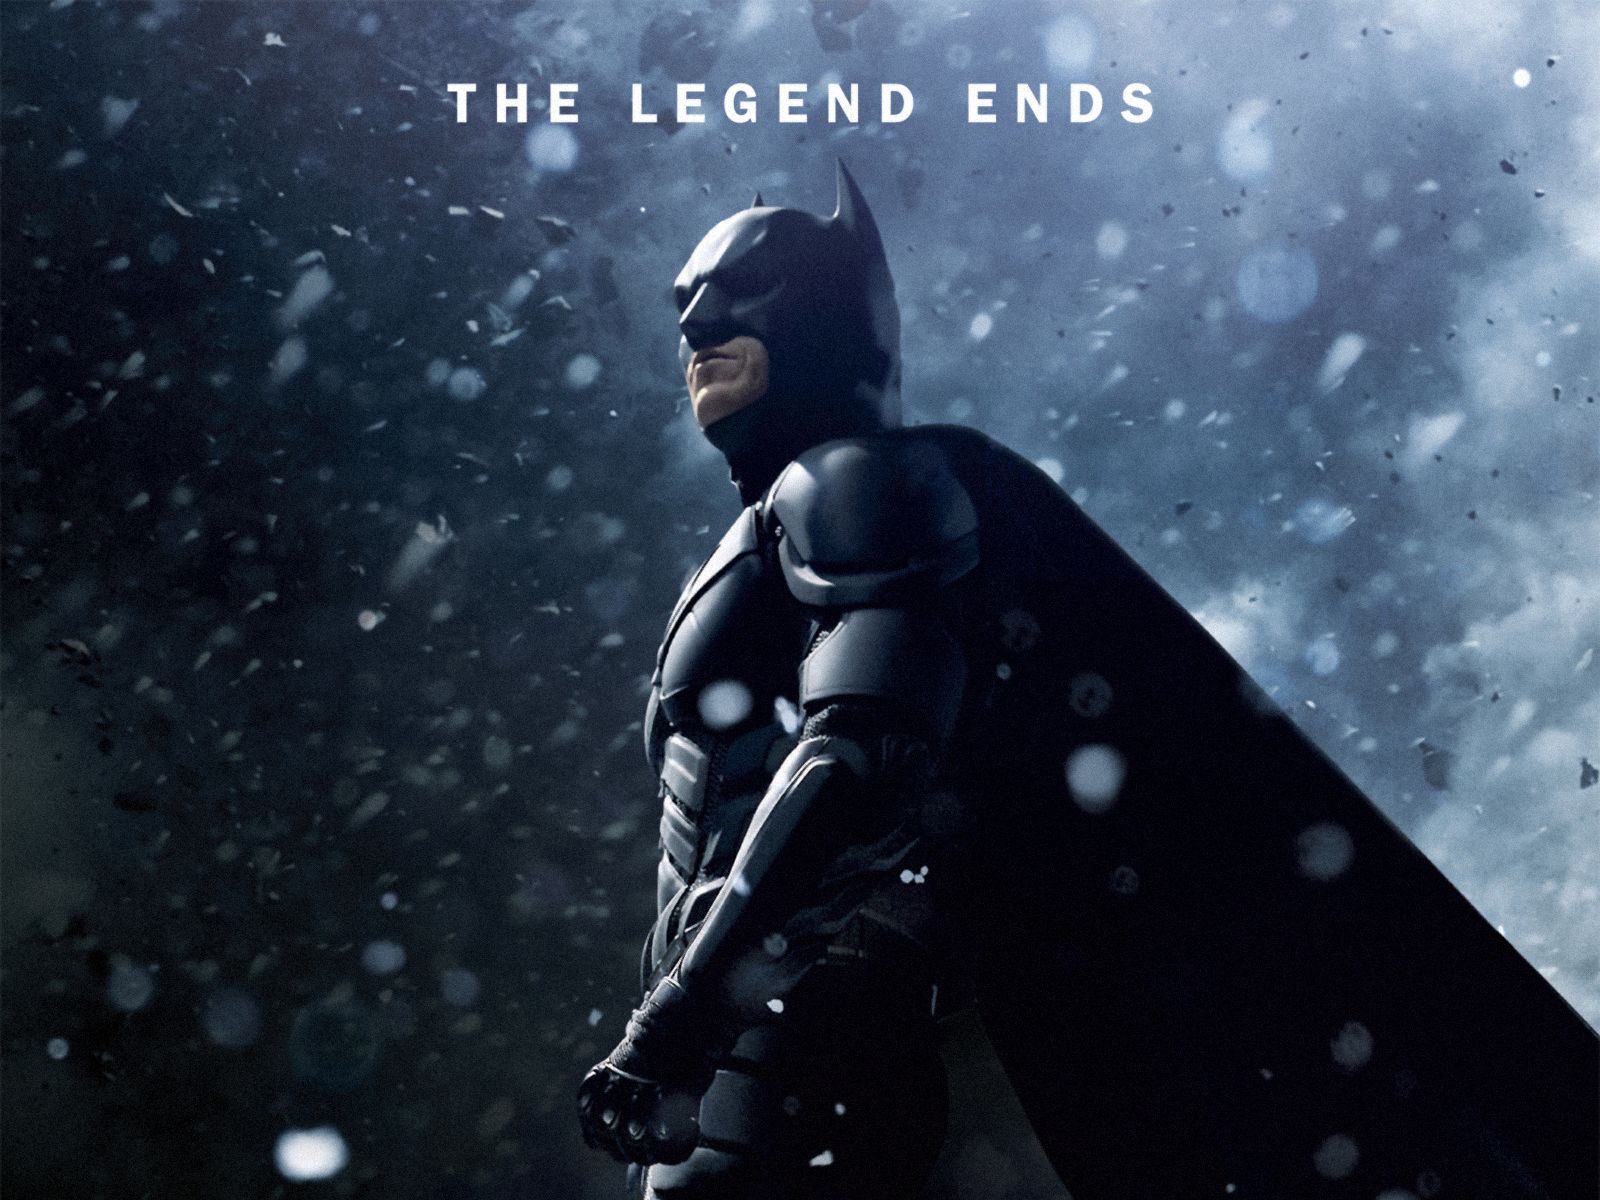  Batman Hintergrundbild 1600x1200. The Dark Knight Rises: Batman Hintergrundbilder. The Dark Knight Rises: Batman frei fotos